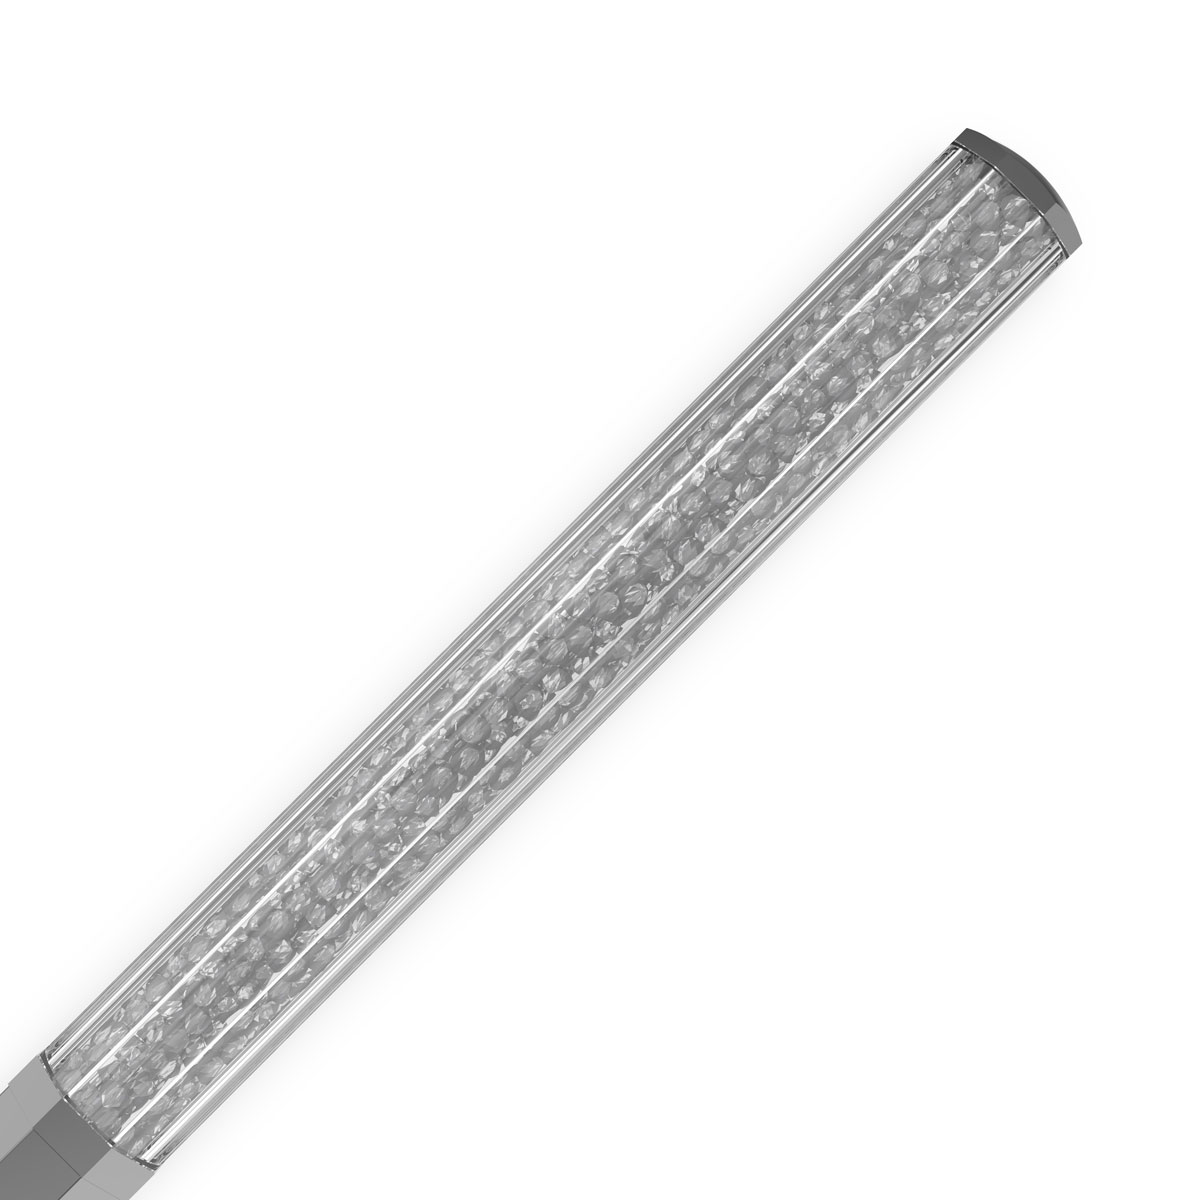 Swarovski Crystal Line Graphite Ballpoint Pen